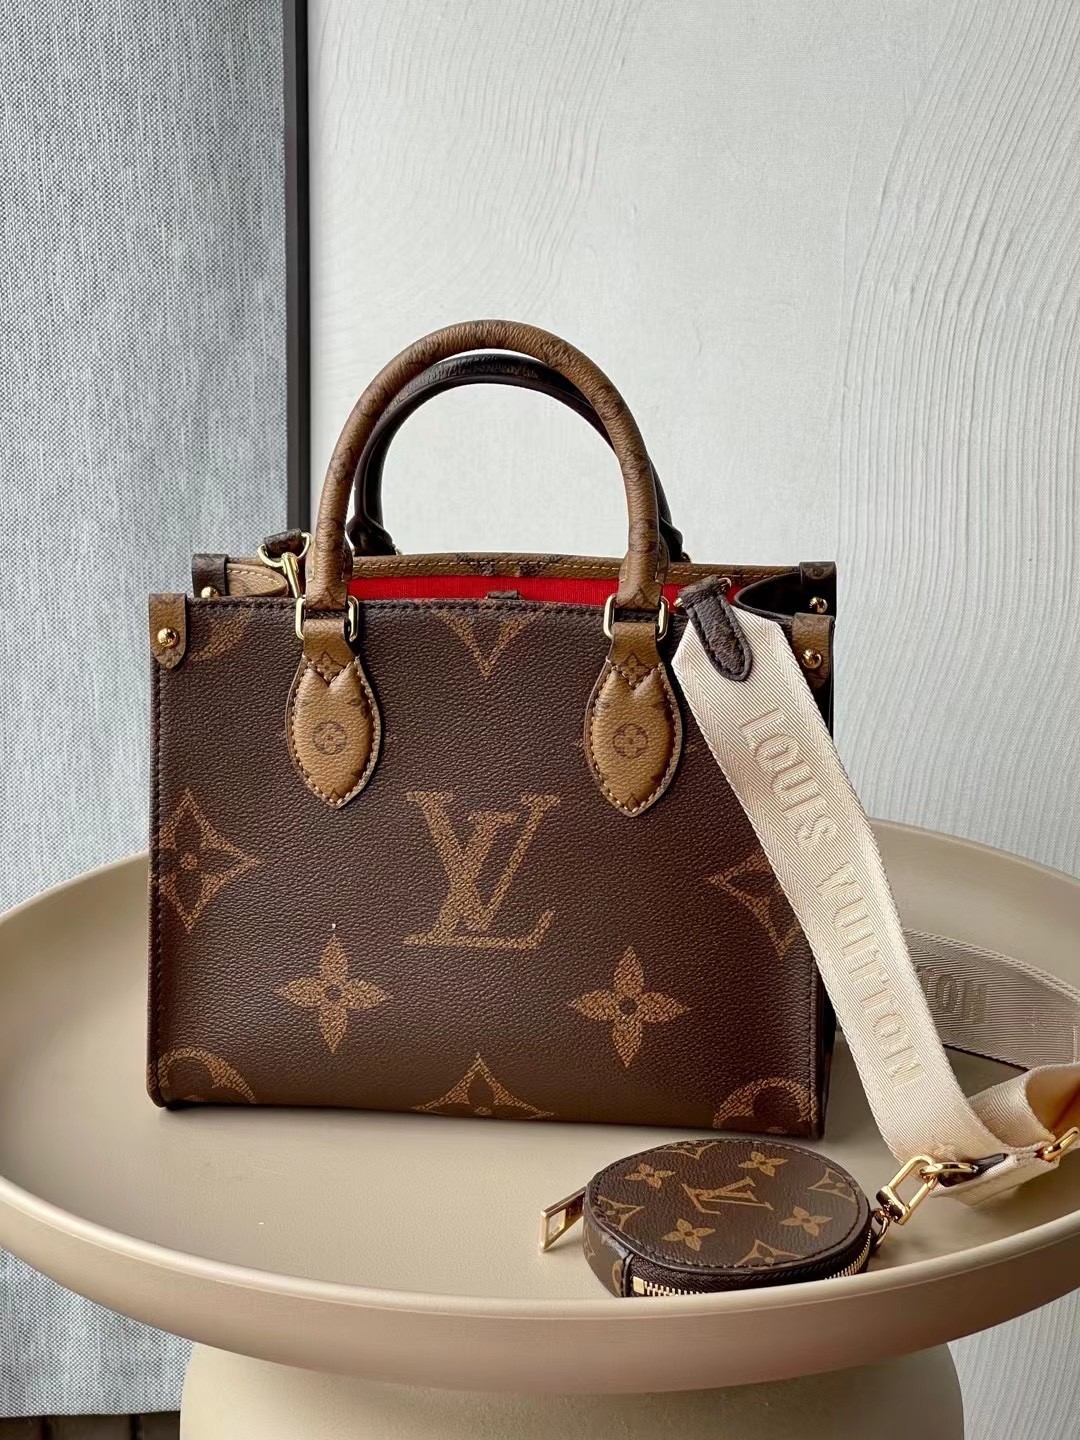 Video: Shebag best seller of Louis Vuitton bags in 2023 (2023 Week 50)-ਵਧੀਆ ਕੁਆਲਿਟੀ ਨਕਲੀ ਲੁਈਸ ਵਿਟਨ ਬੈਗ ਔਨਲਾਈਨ ਸਟੋਰ, ਰਿਪਲੀਕਾ ਡਿਜ਼ਾਈਨਰ ਬੈਗ ru